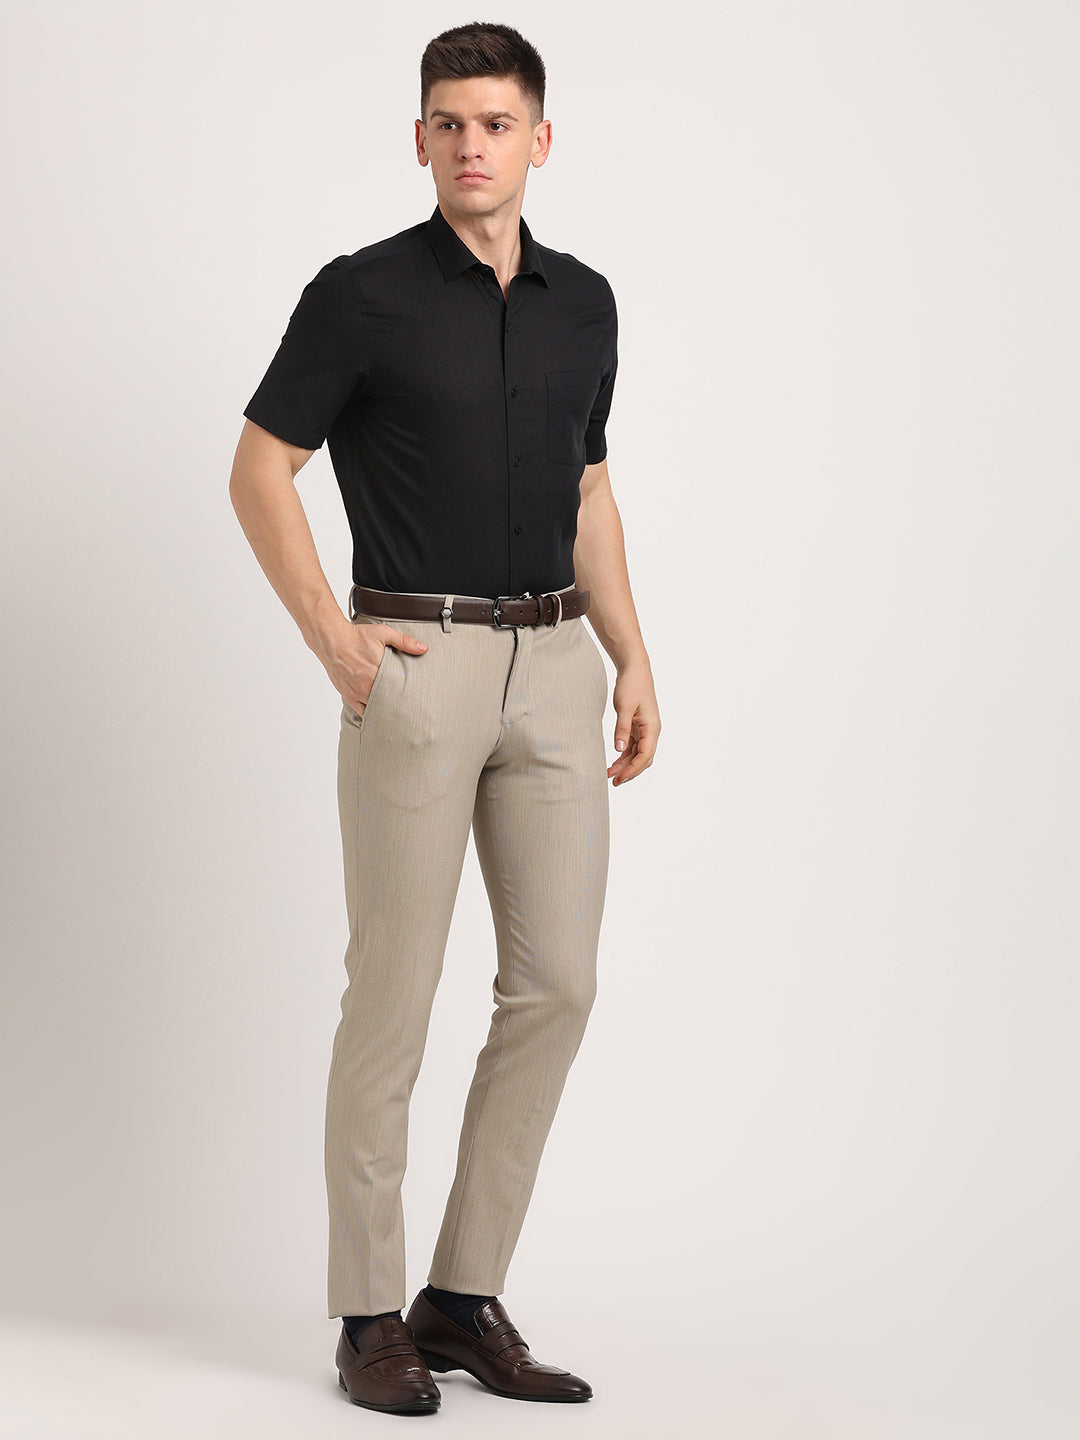 Cotton Linen Black Plain Half Sleeve Formal Shirt